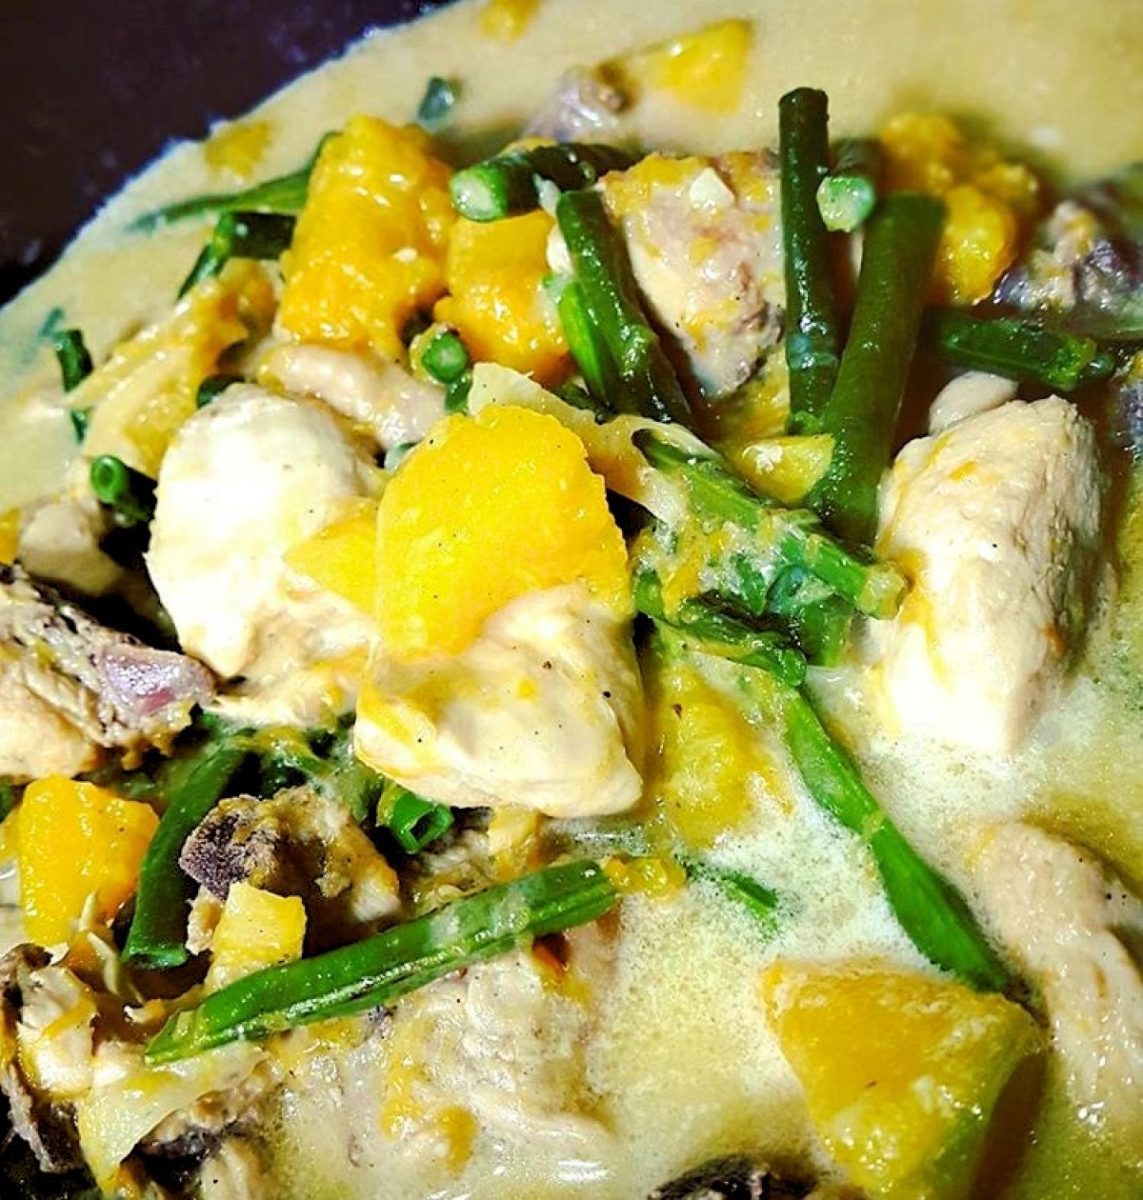 Filipino-style chicken and coconut milk stew